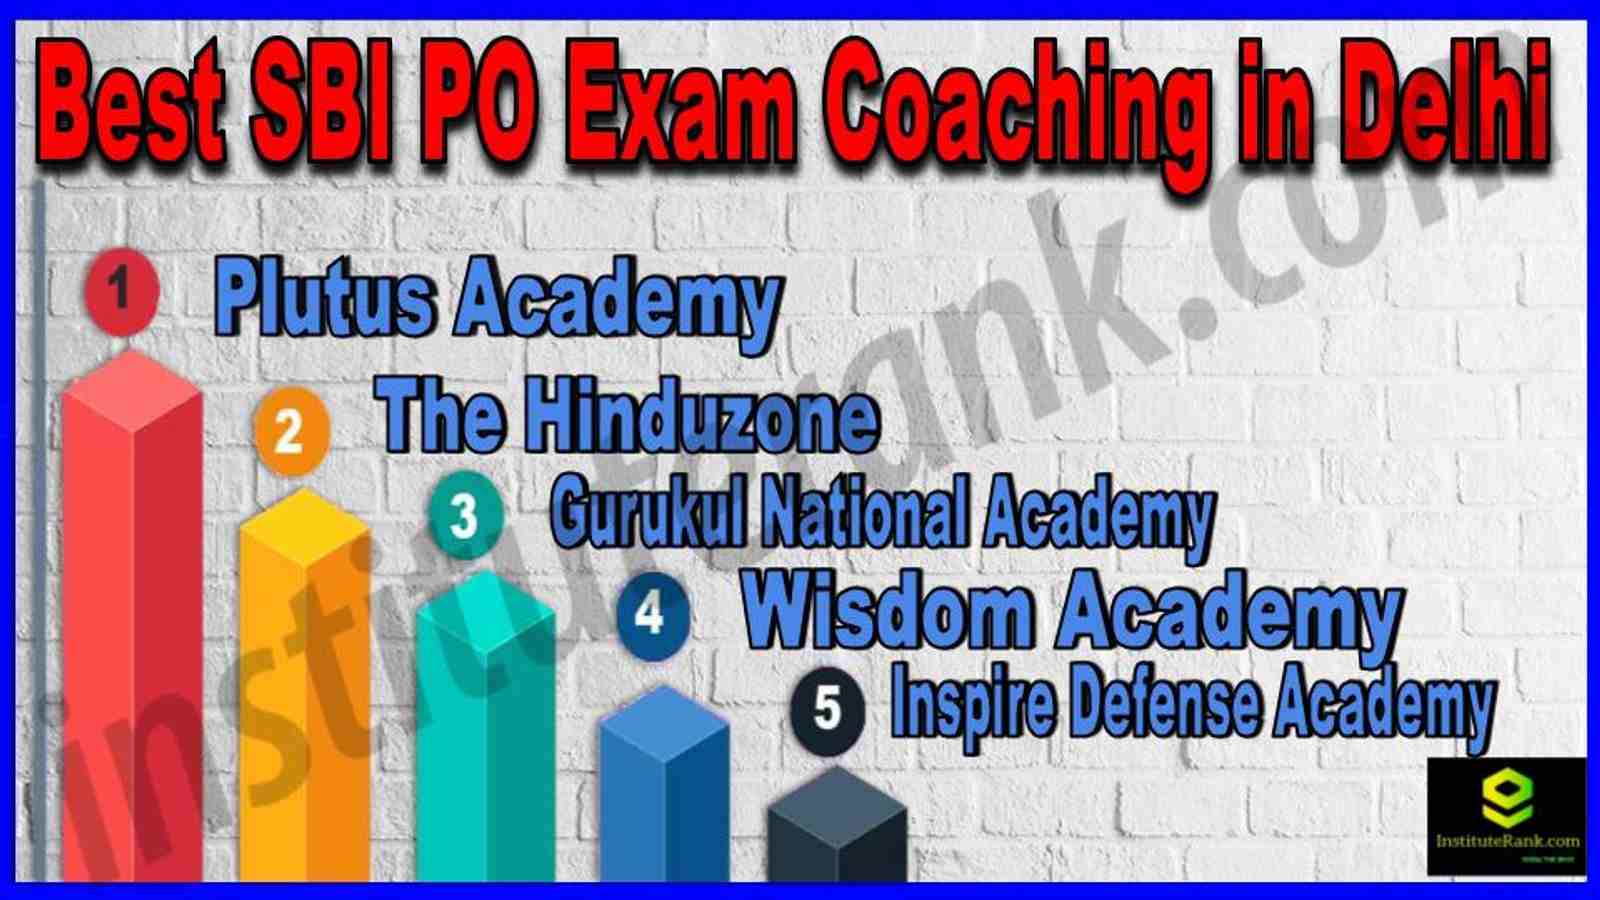 Best SBI PO Exam Coaching in Delhi